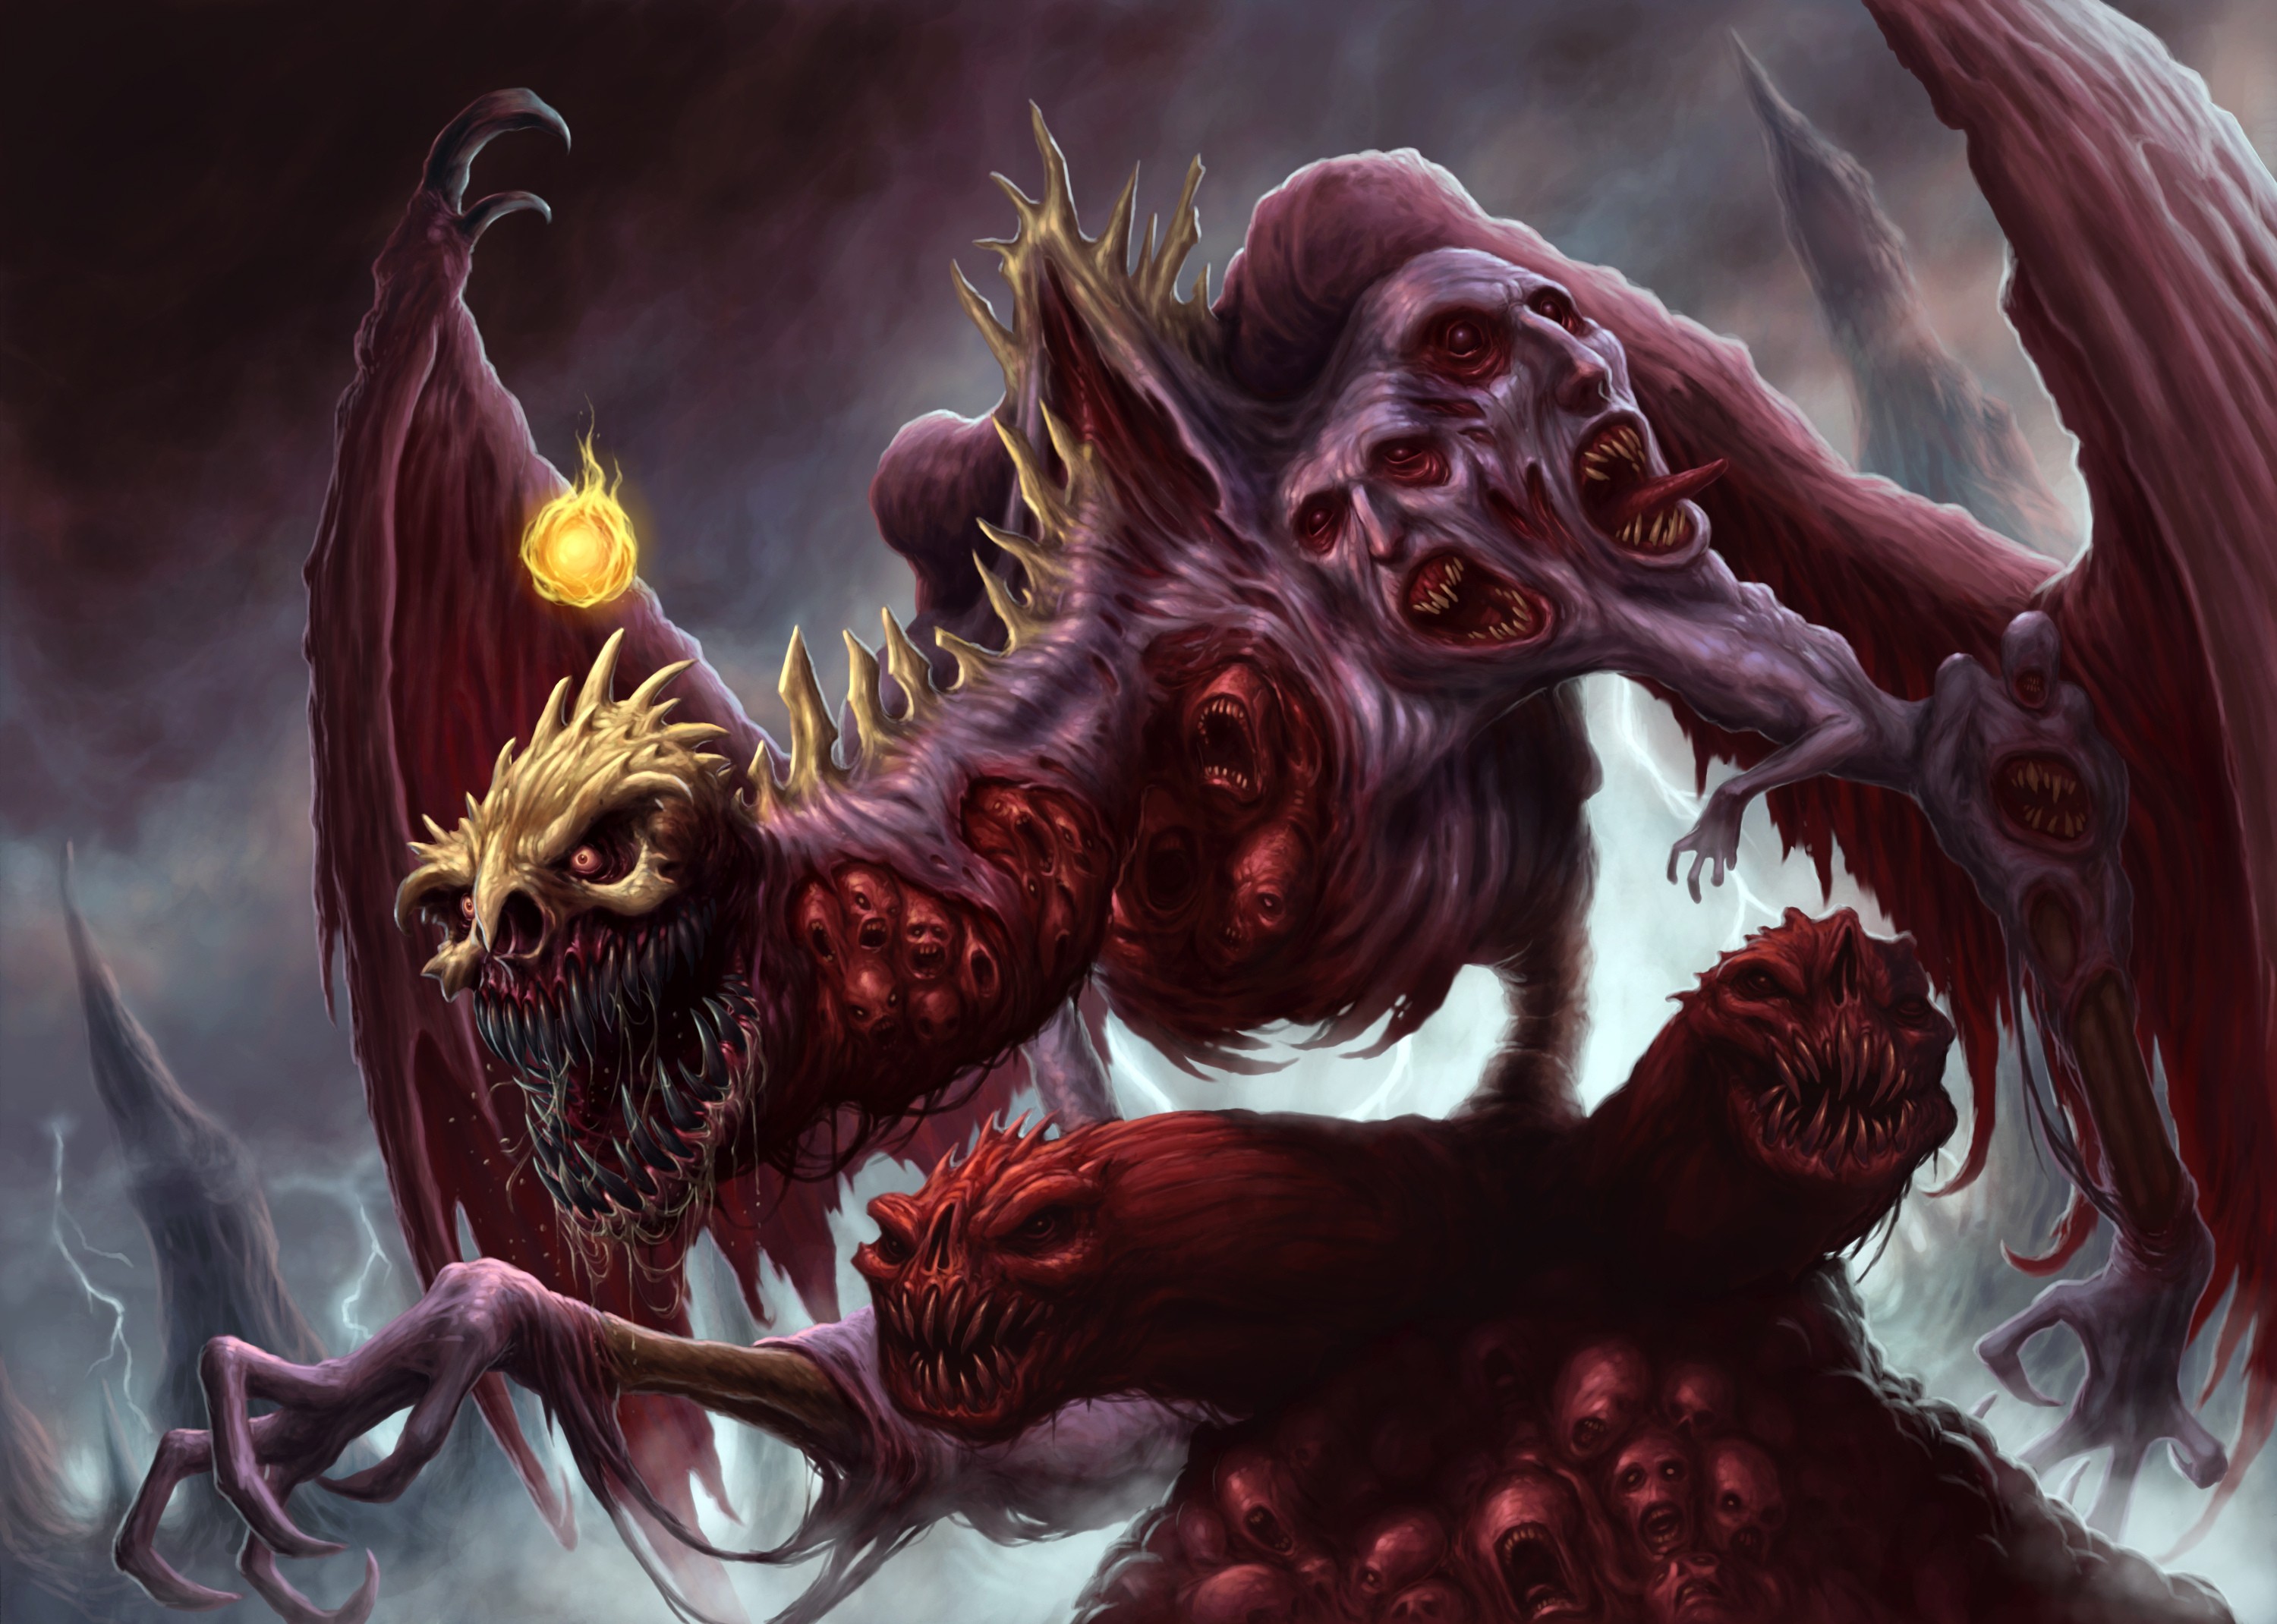 General 3000x2140 fantasy art digital art dark creature face skull wings surreal teeth fireballs